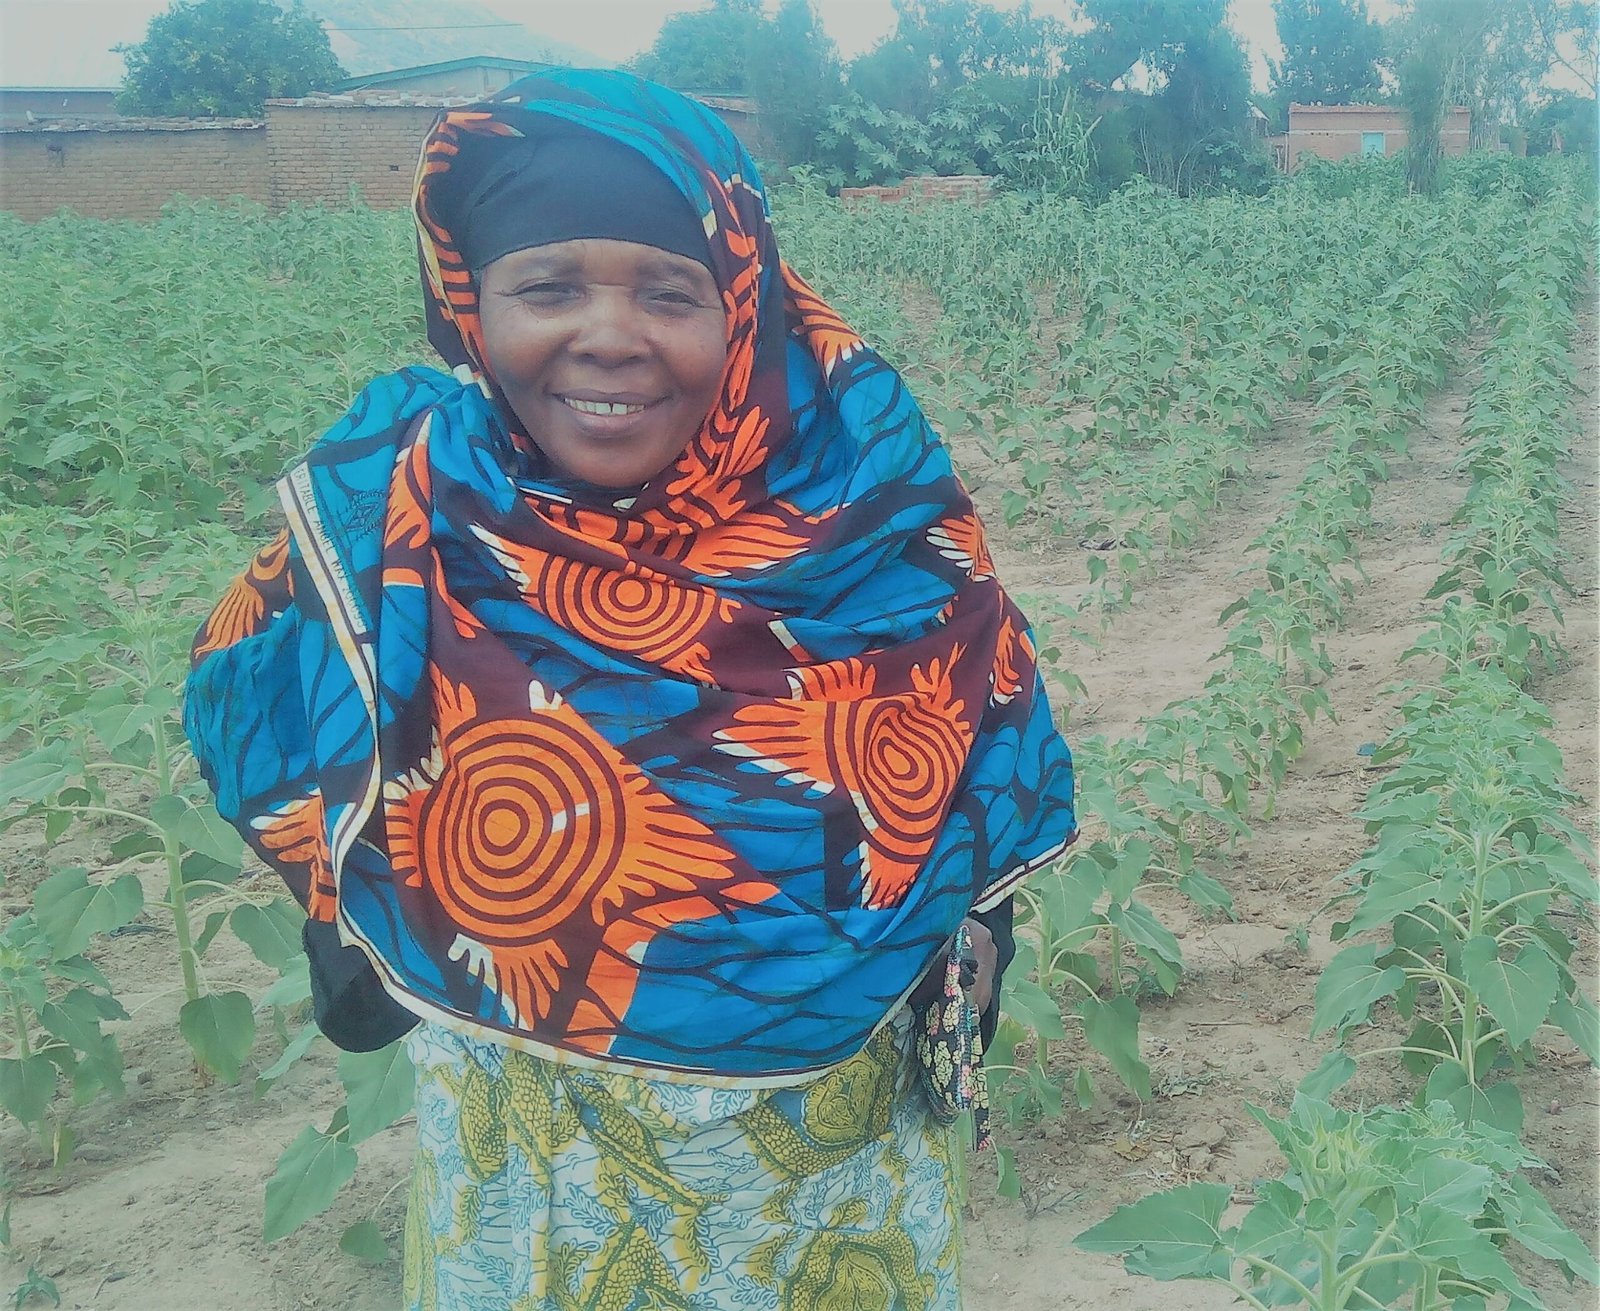 Hybrid seeds show promise for Dodoma farmers